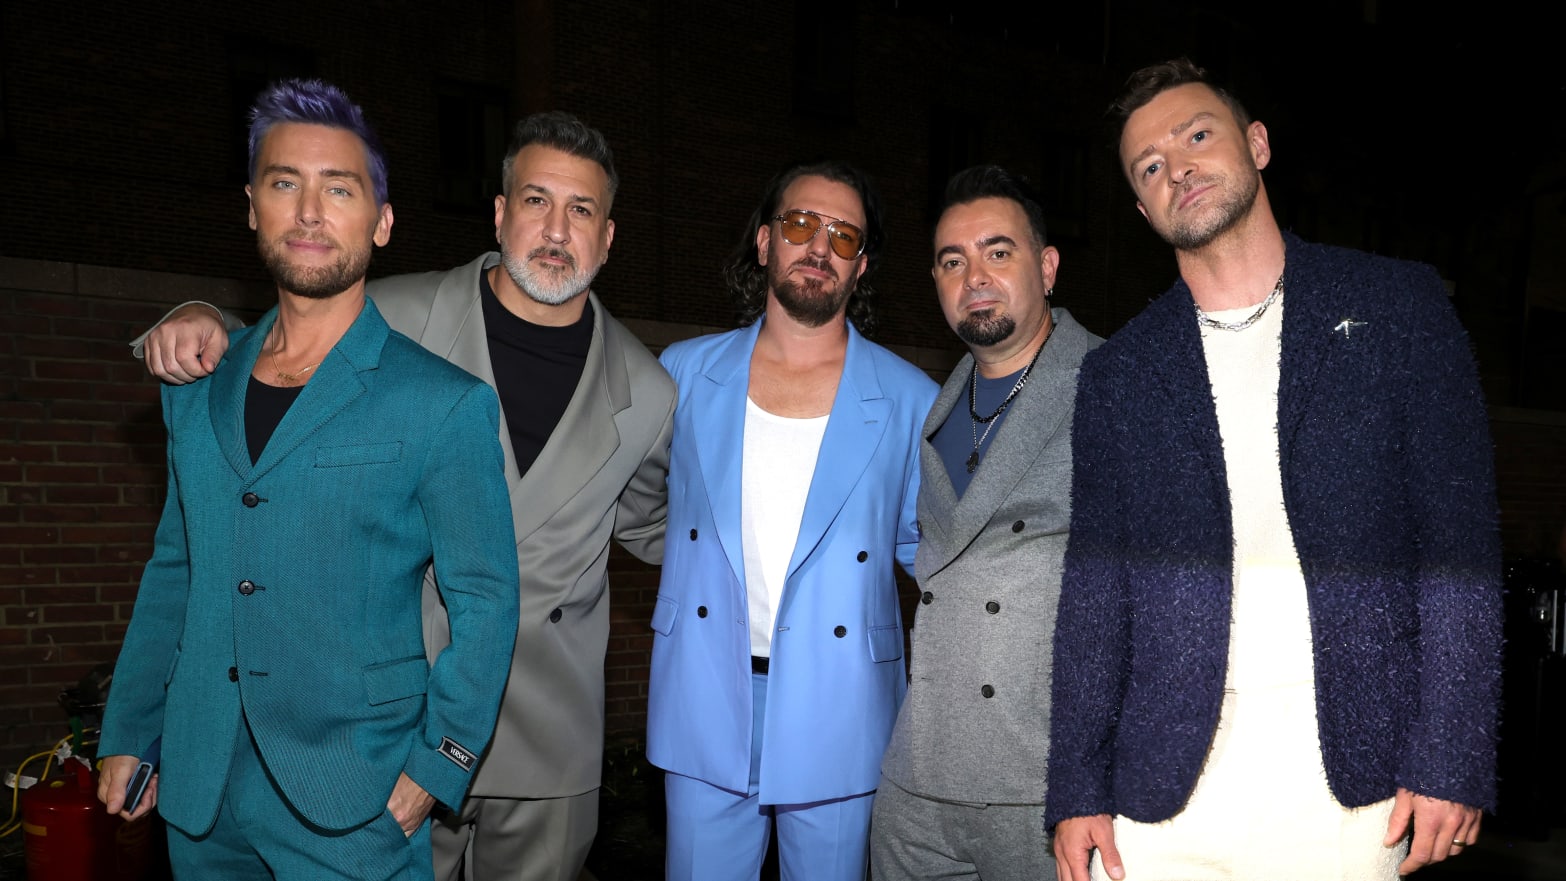 A photo still of Lance Bass, Joey Fatone, JC Chasez, Chris Kirkpatrick, and Justin Timberlake at the MTV Video Music Awards.